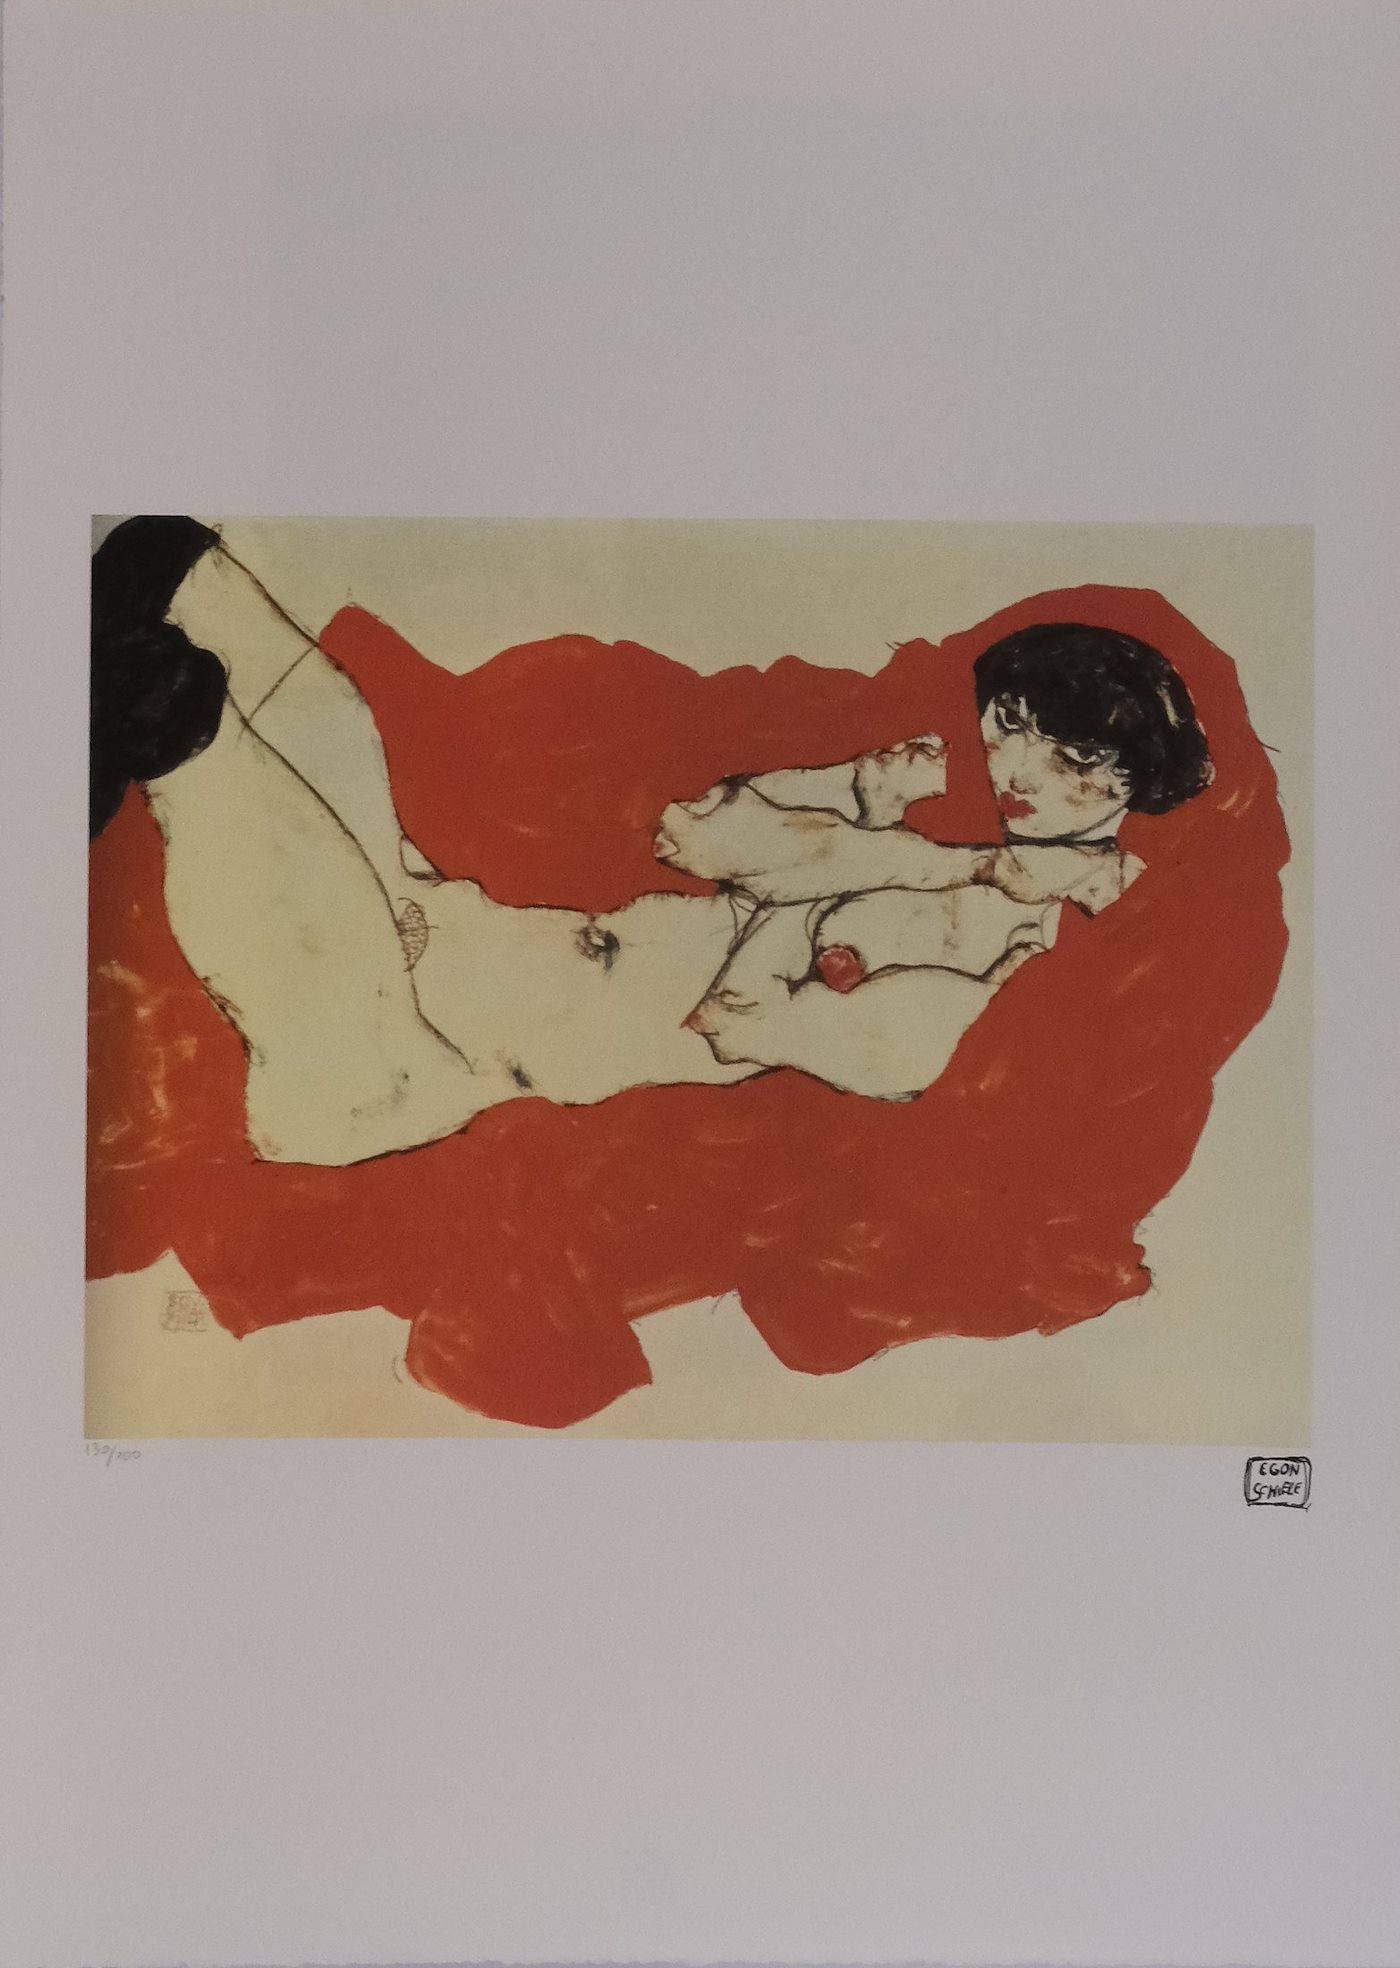 Egon Schiele - Sitting Nude